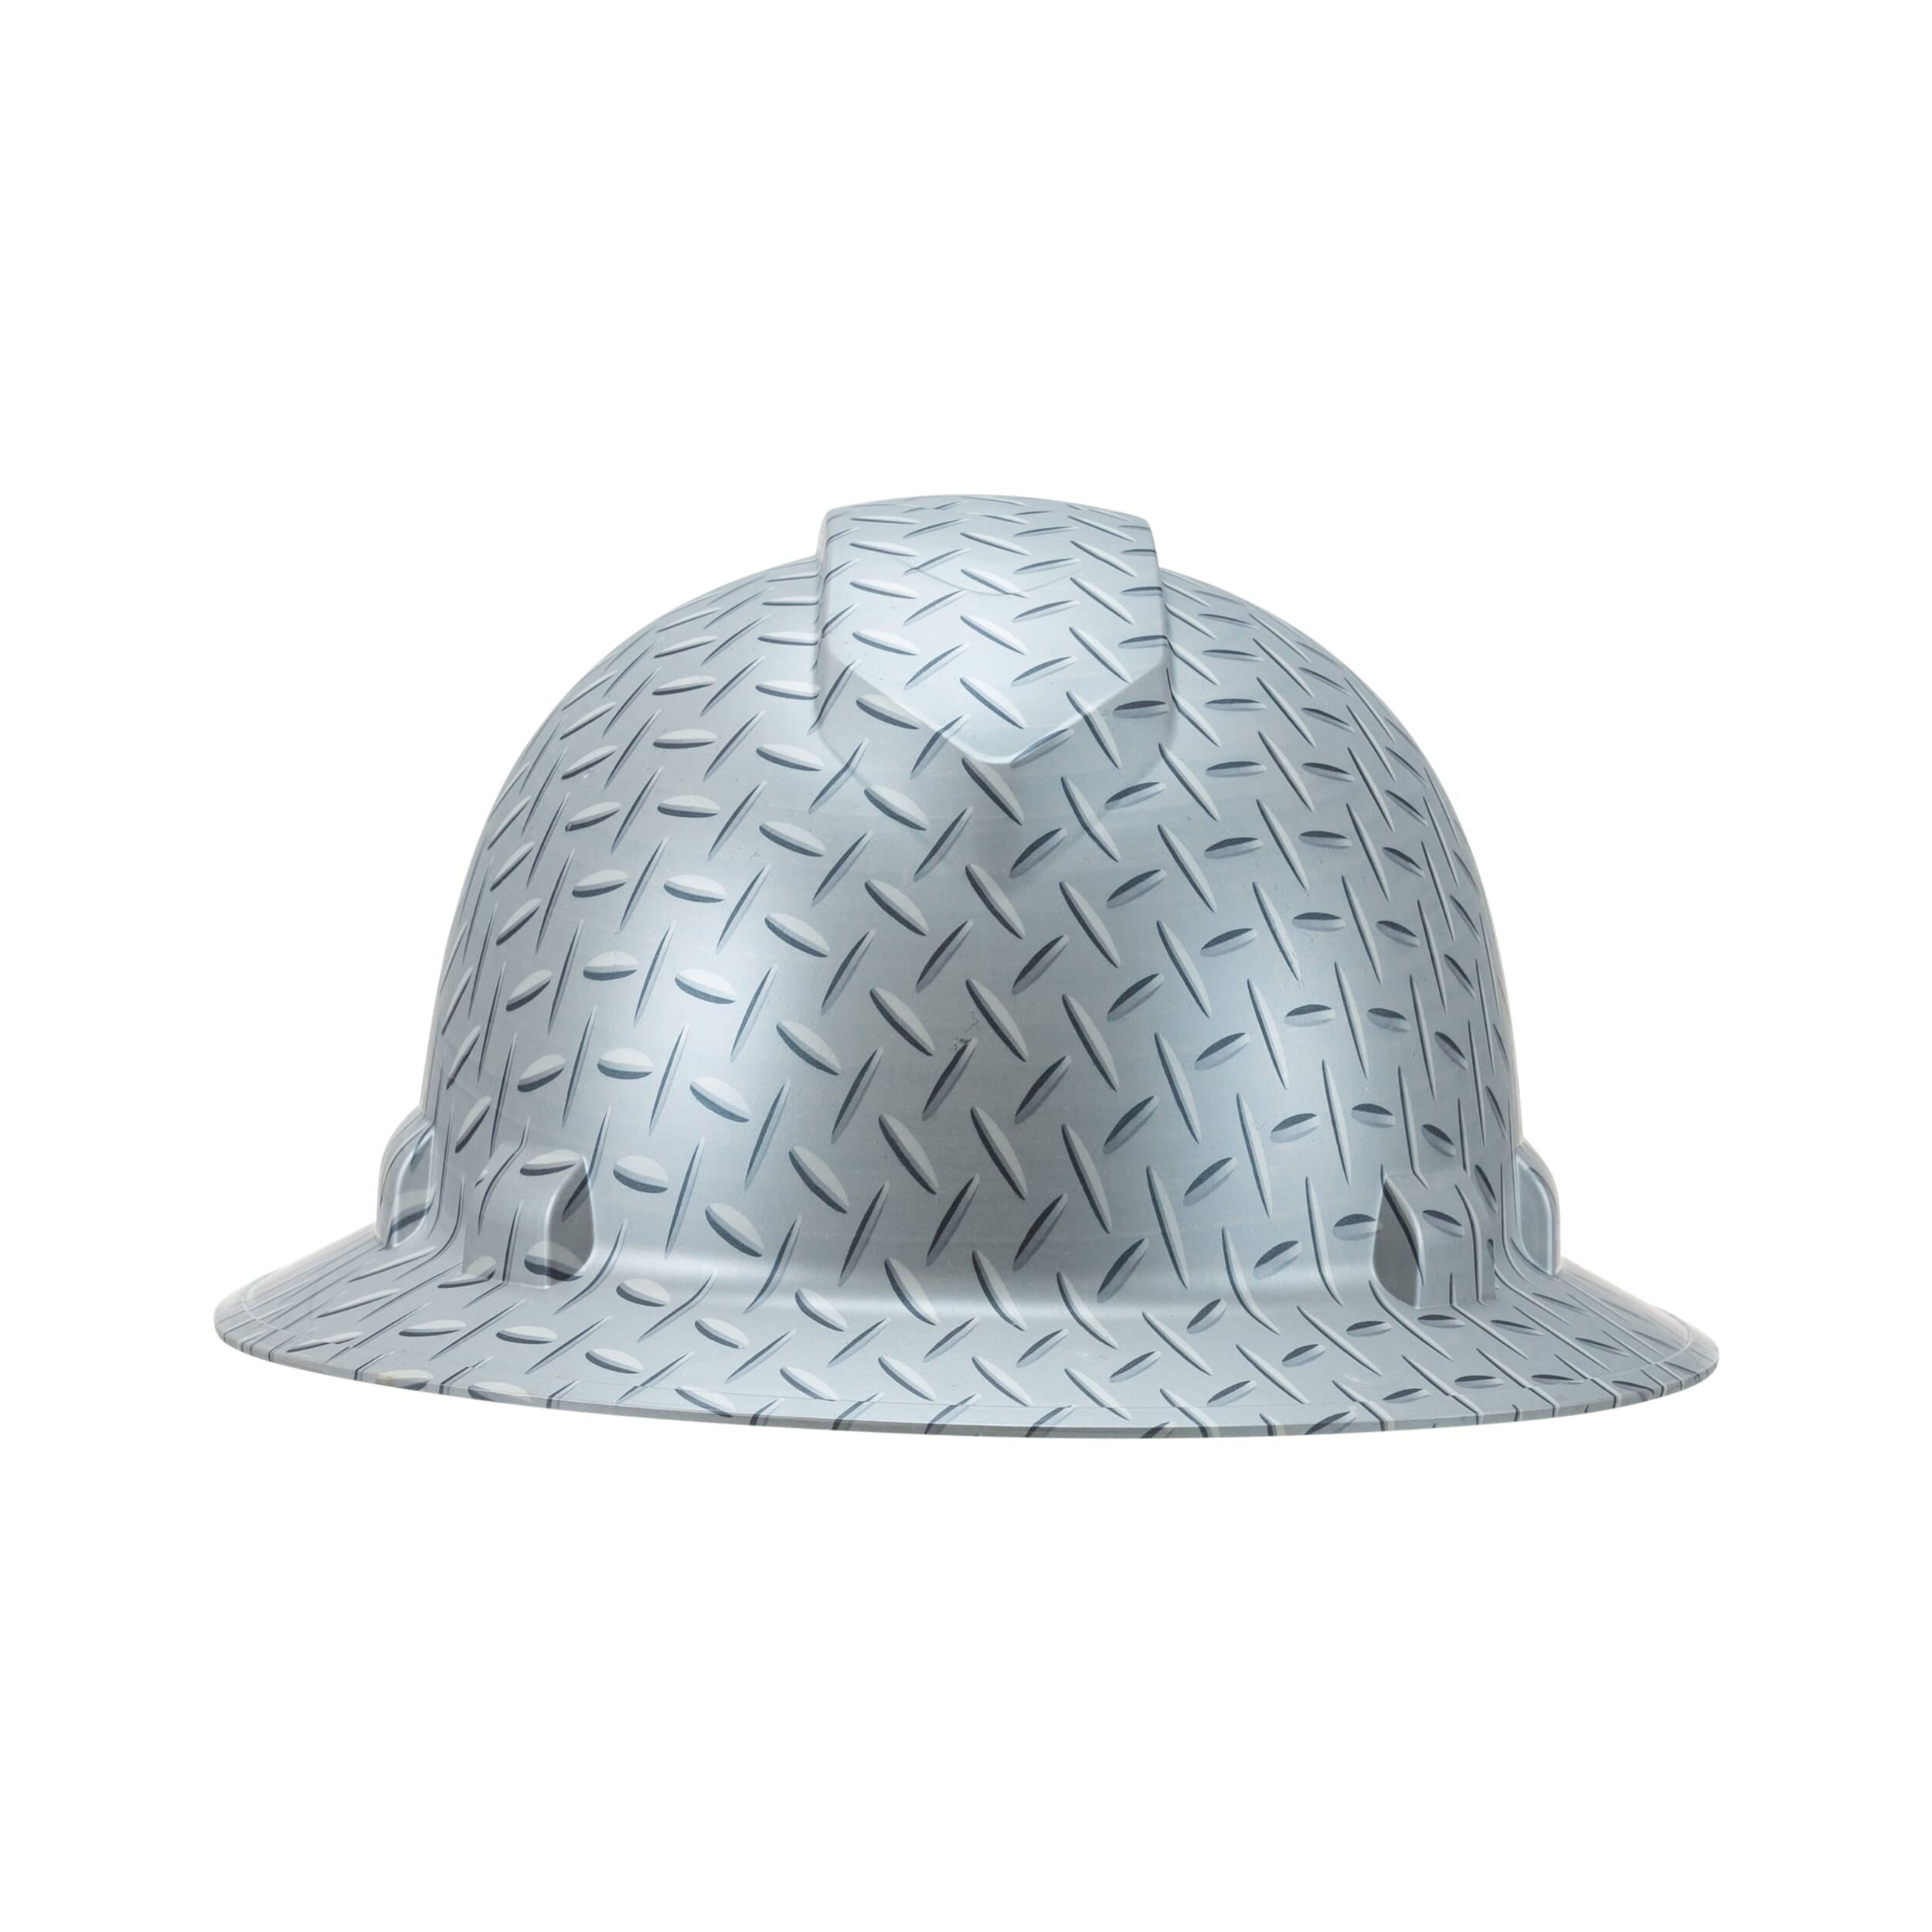 Full Brim Pyramex Hard Hat, Custom Steel Tread Design, Safety Helmet, 6 Point